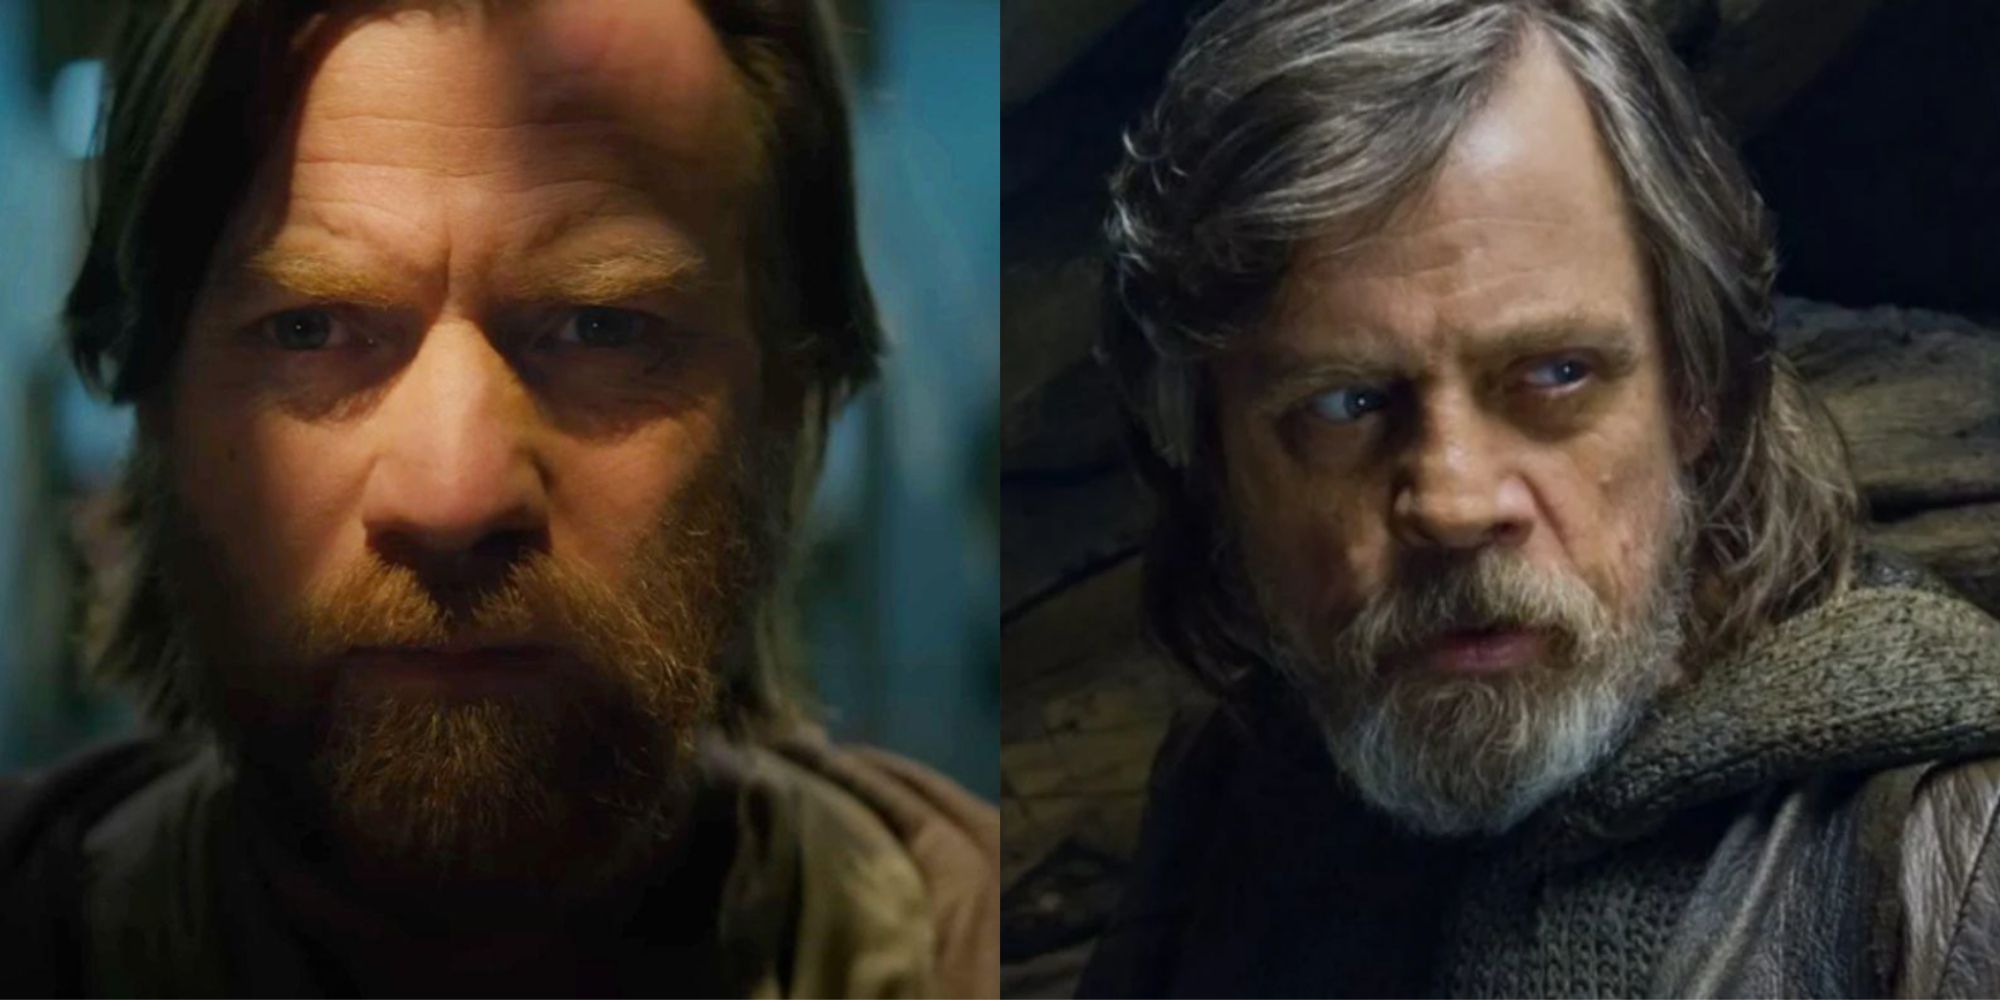 Split image of Obi-Wan Kenobi (Ewan McGregor) looking serious in Obi-Wan Kenobi and Luke Skywalker (Mark Hamill) looking serious in Star Wars: The Last Jedi